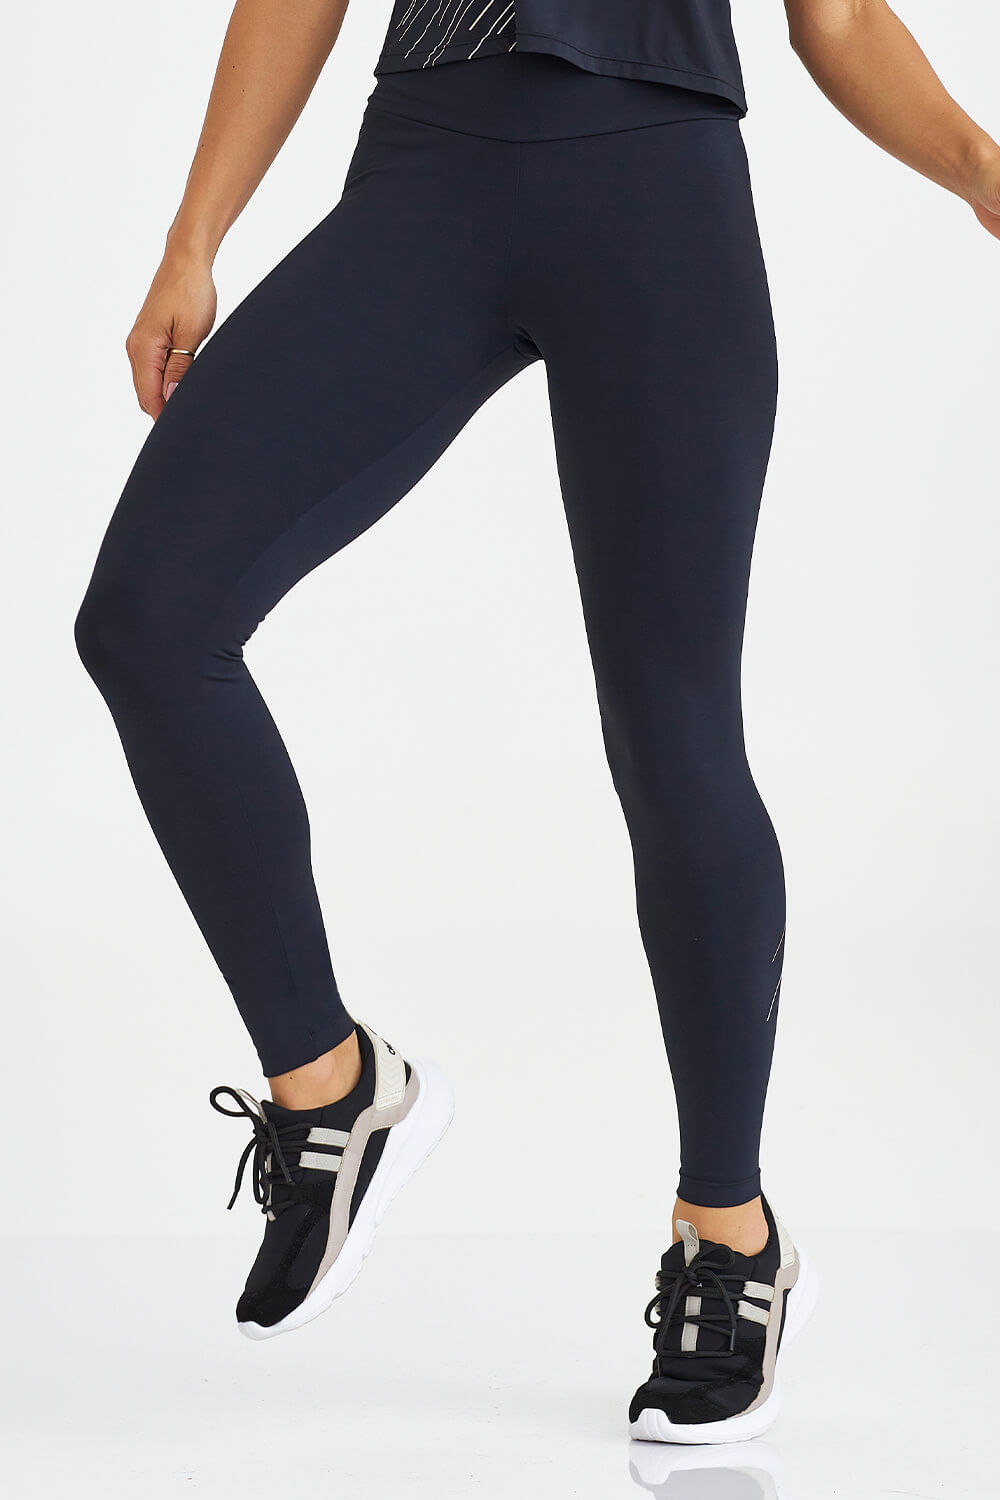 Legging Atlanta Empina Bumbum Preta Exclusiva - Moving Fitness Wear